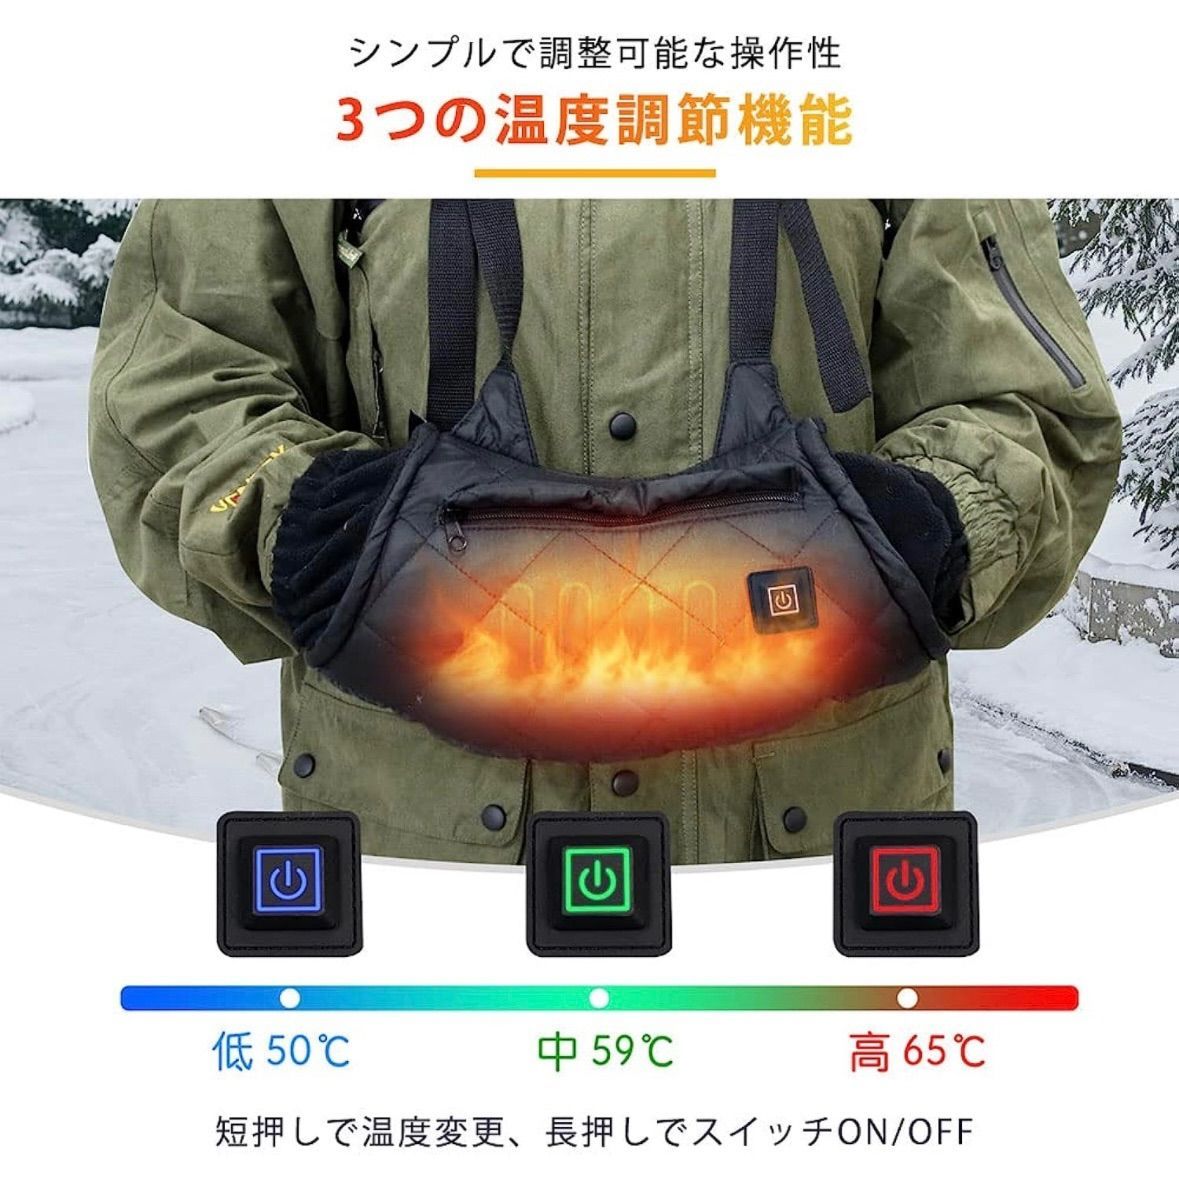 [YVZAI] USB電熱ハンドウォーマー 電熱手袋 ヒートグロー 冷え対策 USB給電 3段階温度調節 キャンプ 釣り 登山 寒さ対策 冬用 防風 防寒_画像3